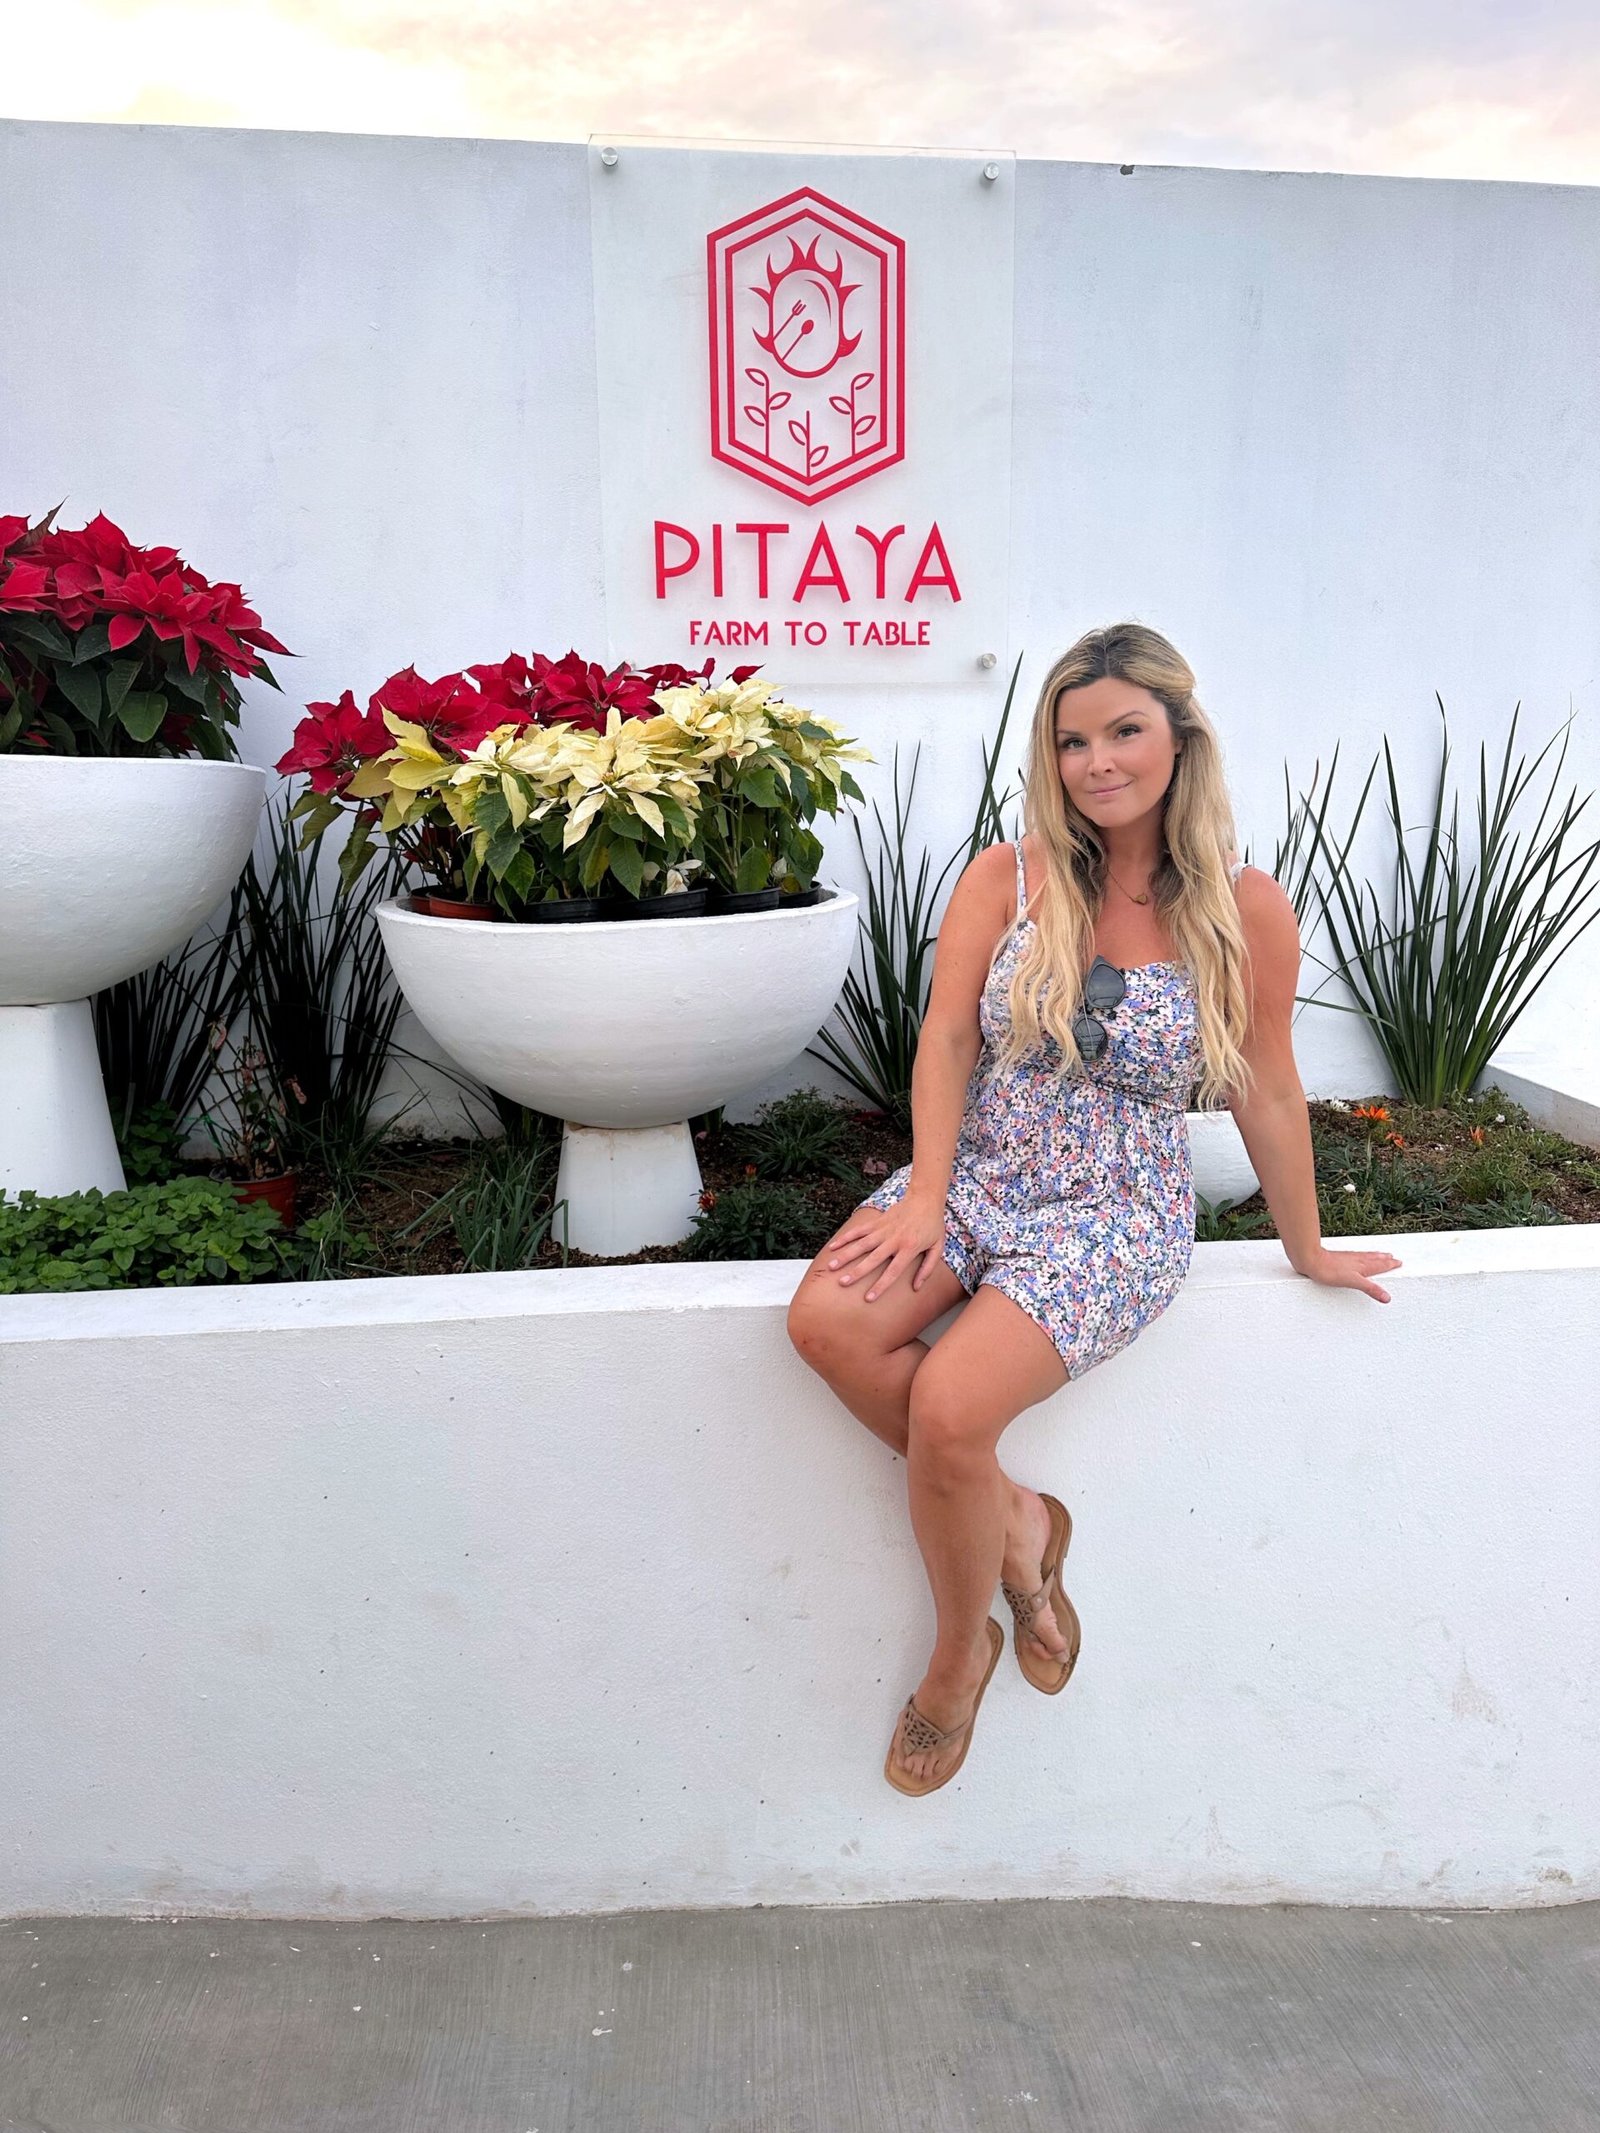 La Ventana restaurants Pitaya Farm to table